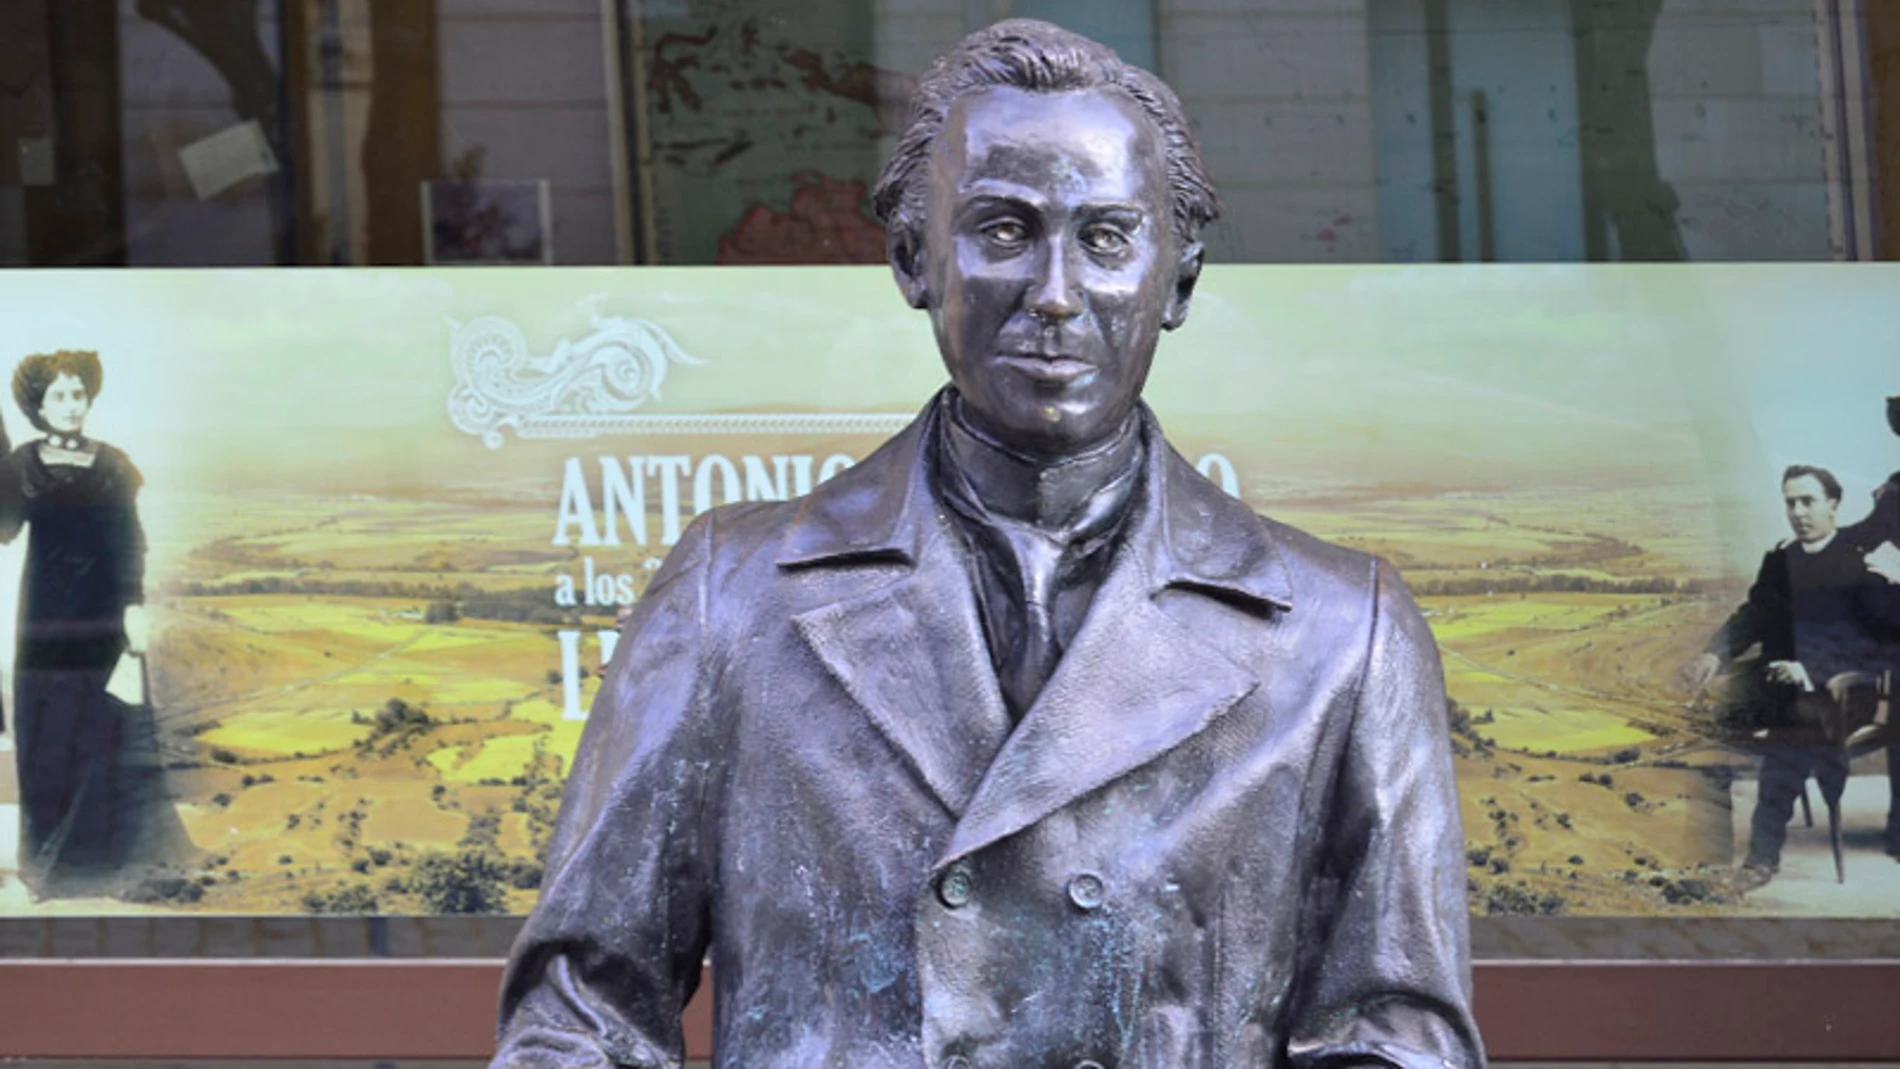 Estatua de Antonio Machado en Soria